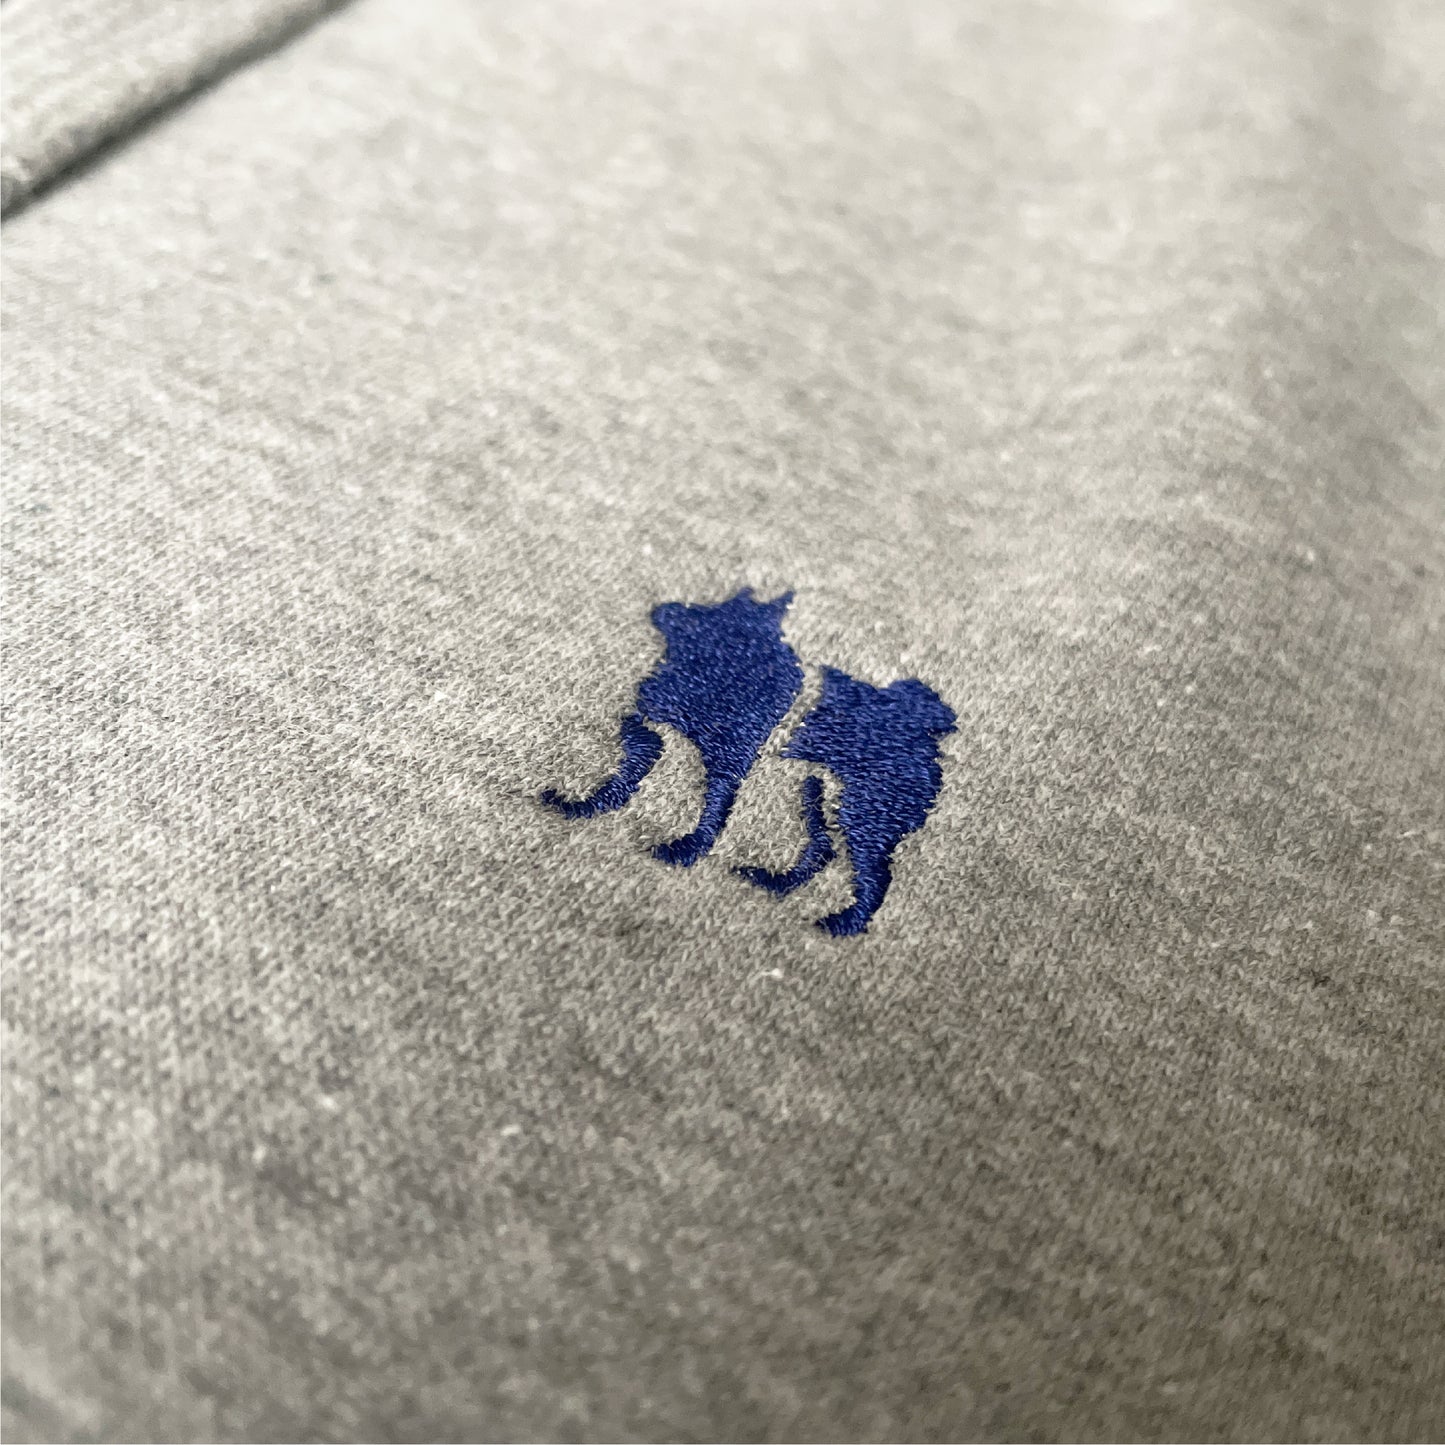 SHIBA/Shiba Inu one point embroidery premium hoodie / Premium Simple hoodie